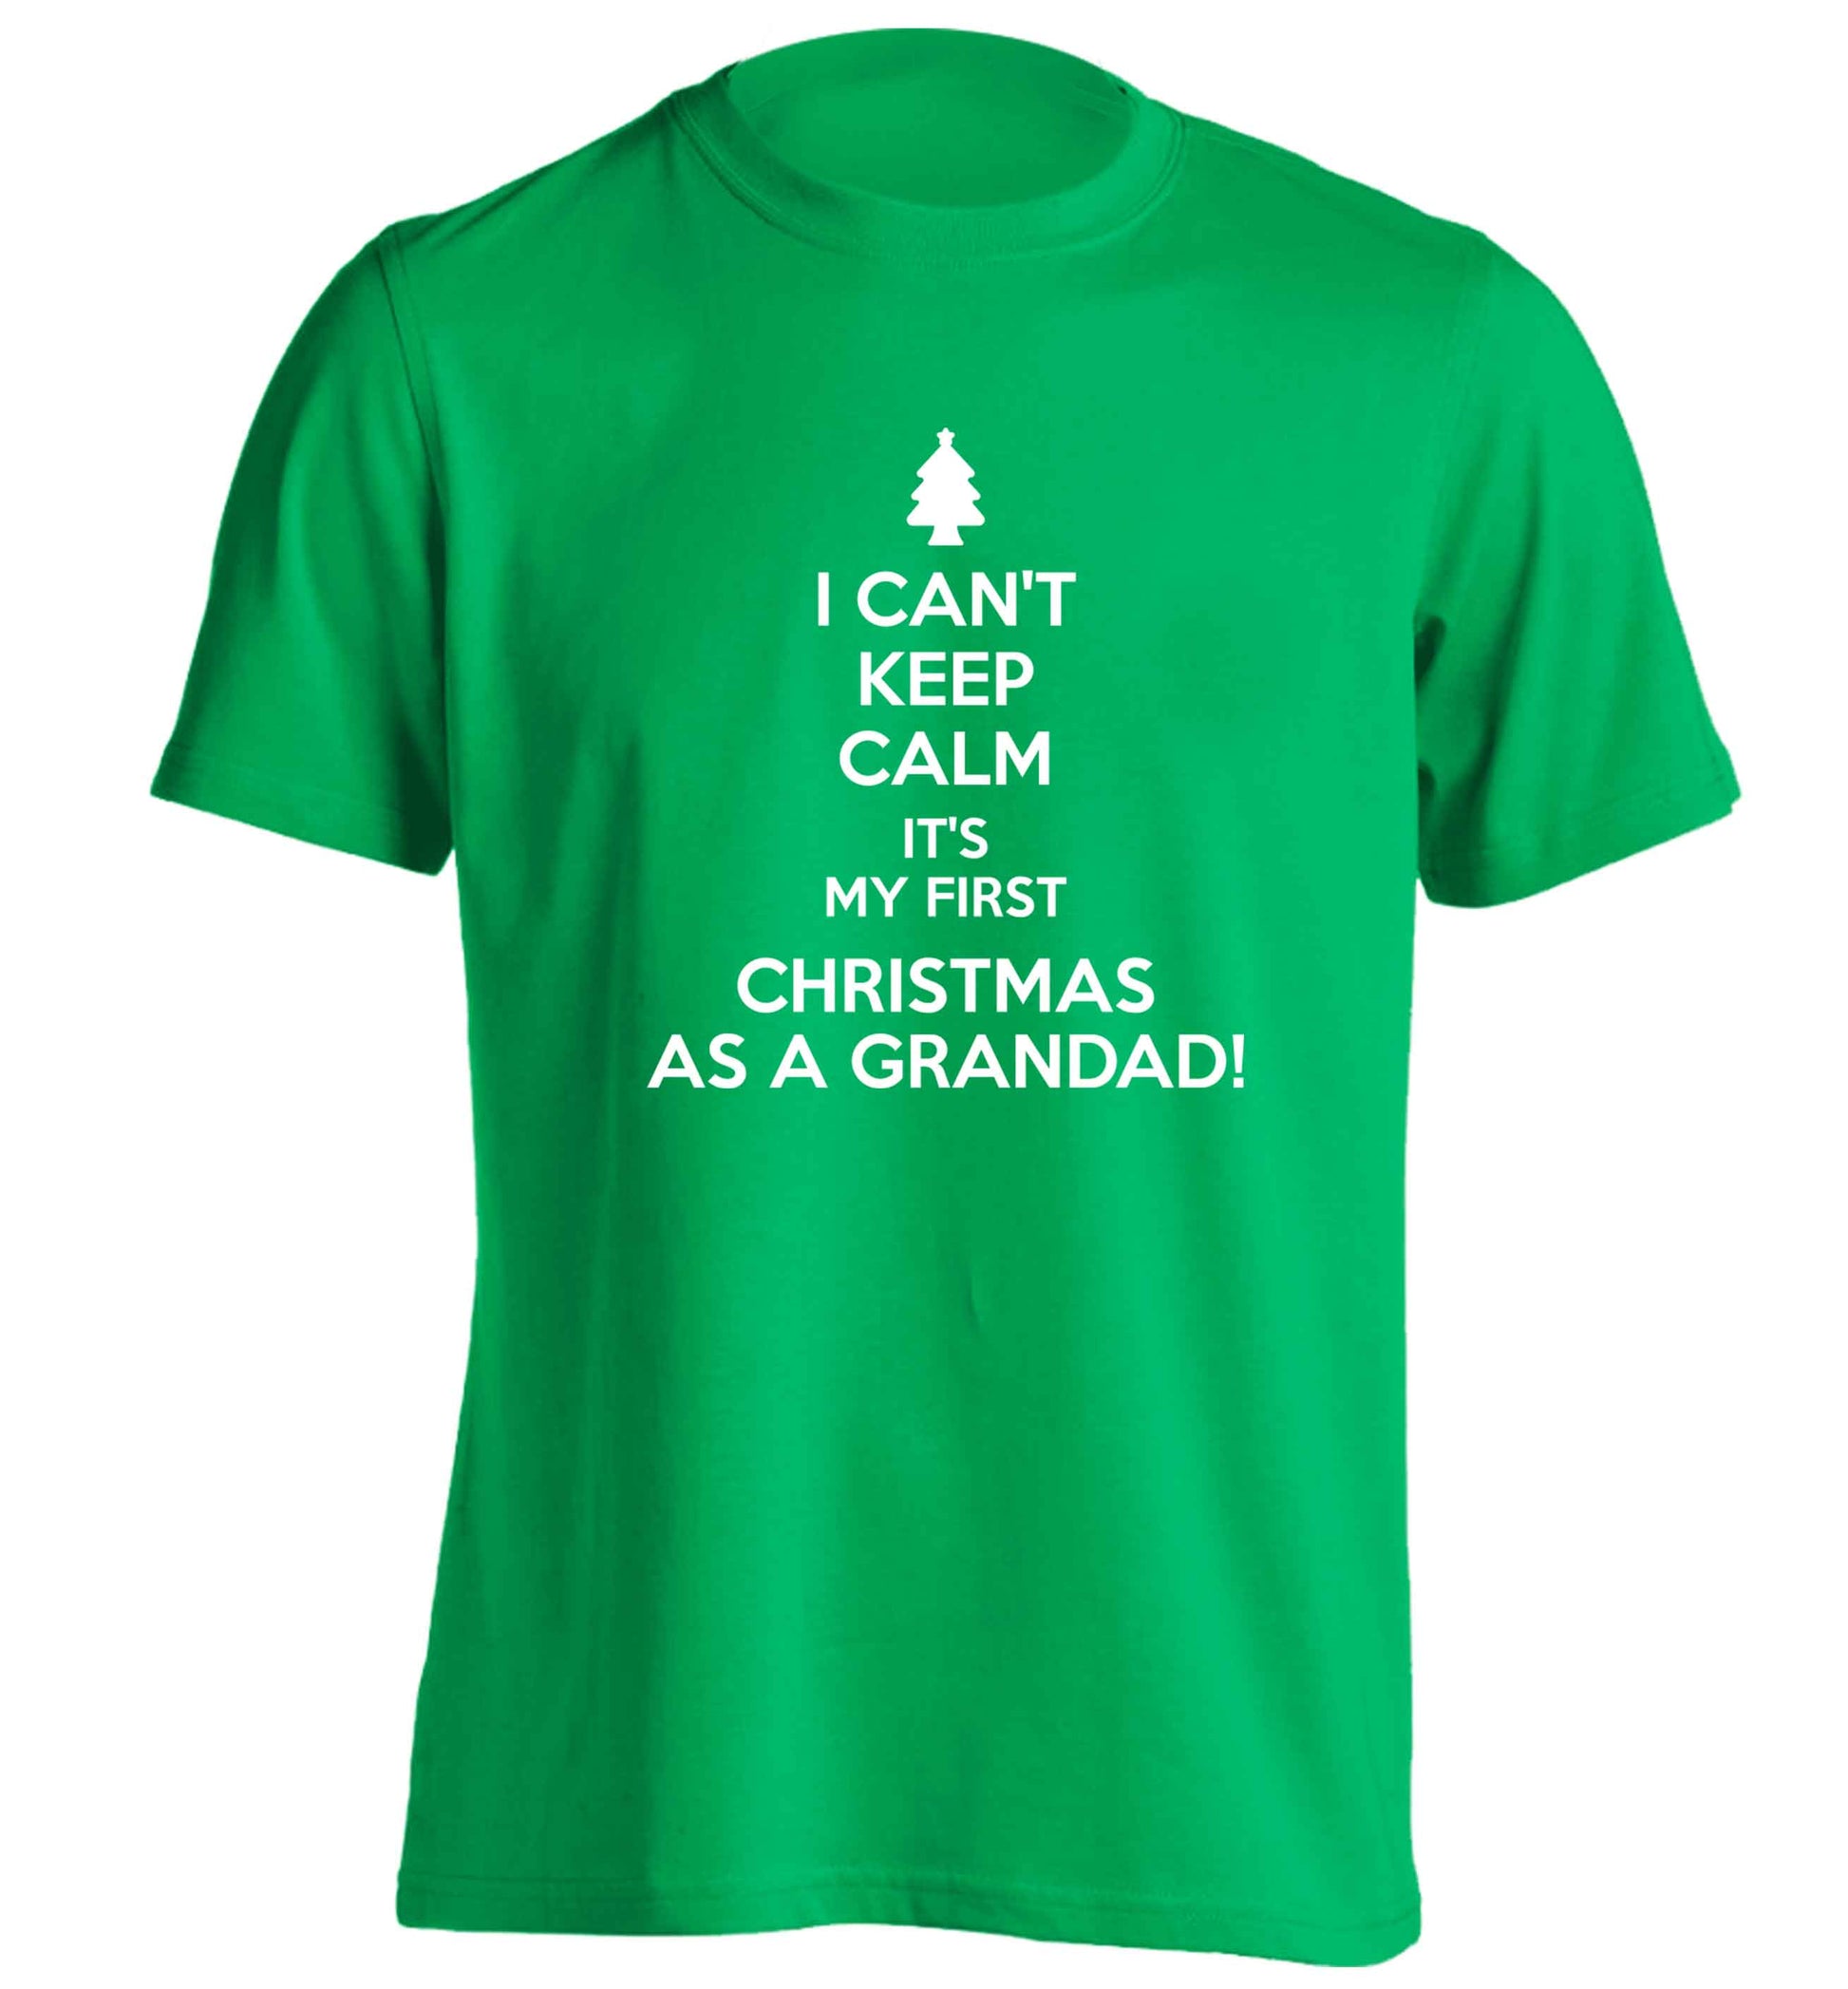 I can't keep calm it's my first Christmas as a grandad! adults unisex green Tshirt 2XL